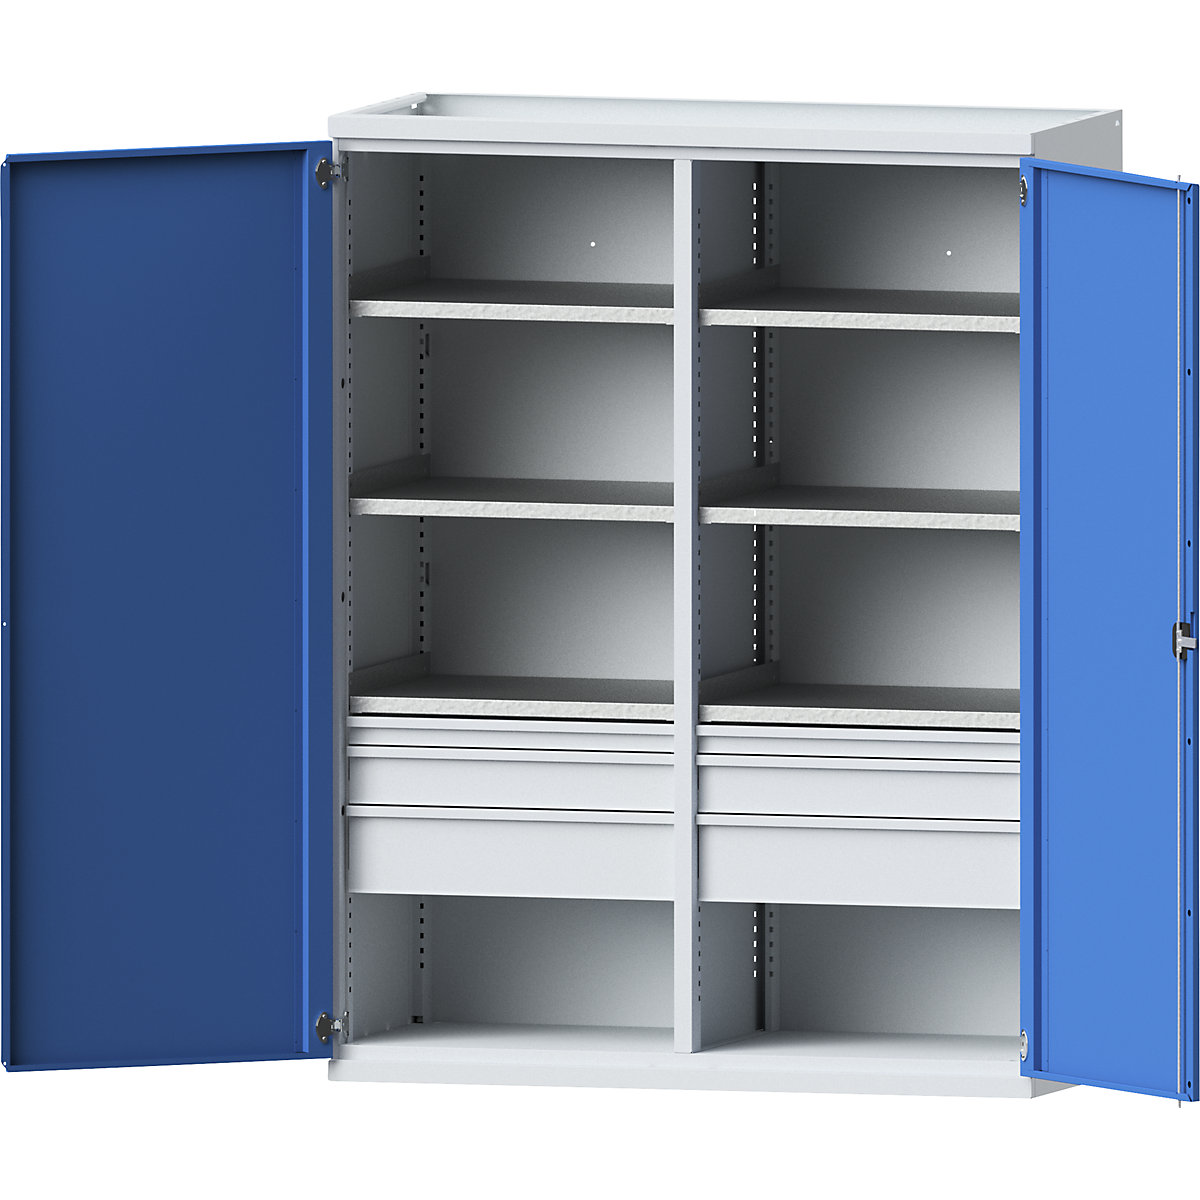 JUMBO heavy duty cupboard made of sheet steel – eurokraft pro, 6 shelves, drawers 2 x 60 mm, 2 x 120 mm, 2 x 180 mm high, light grey / light blue-2